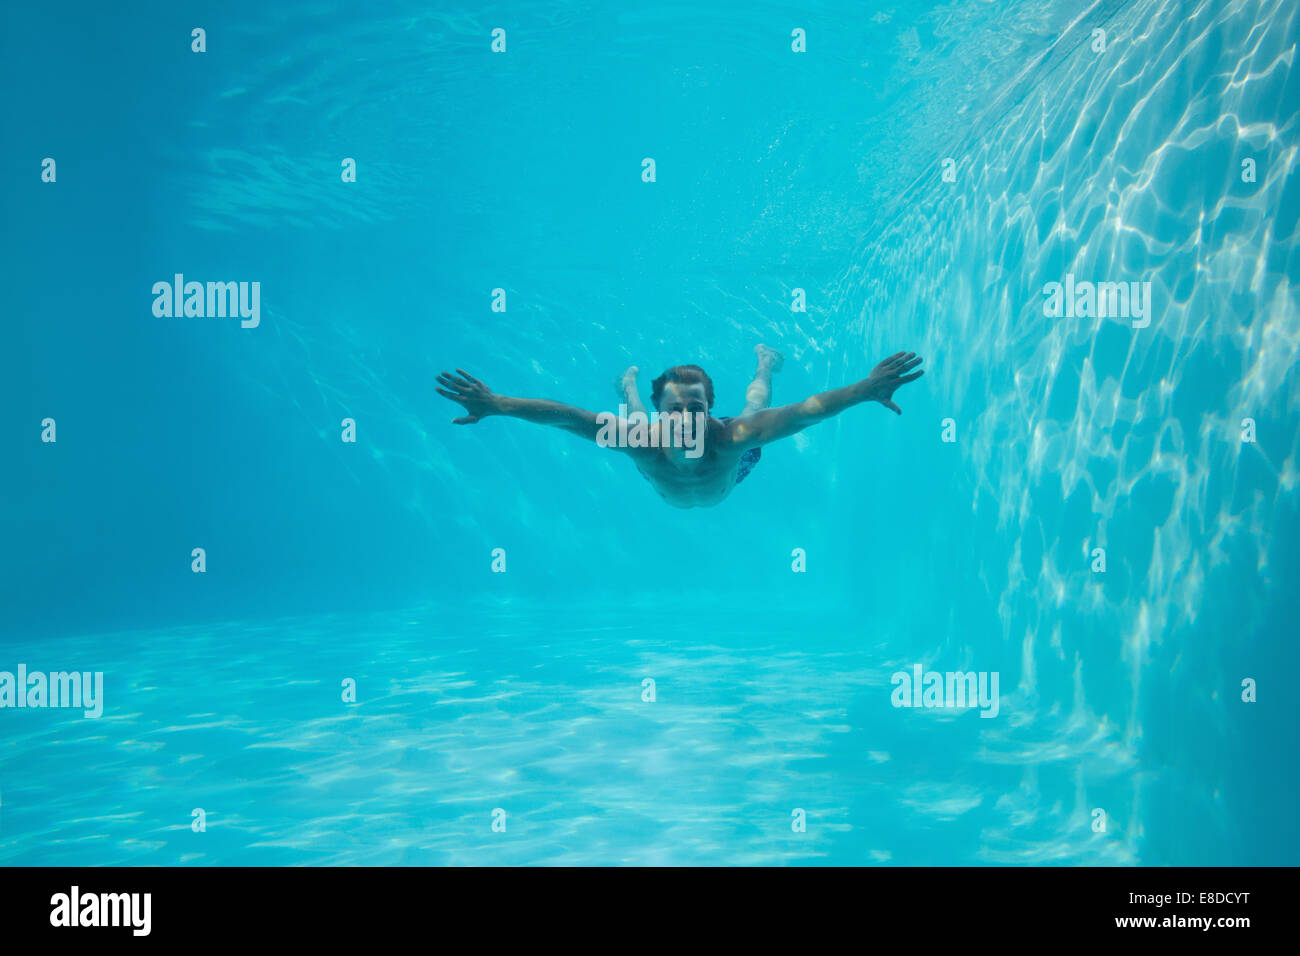 Young man swimming underwater Stock Photo